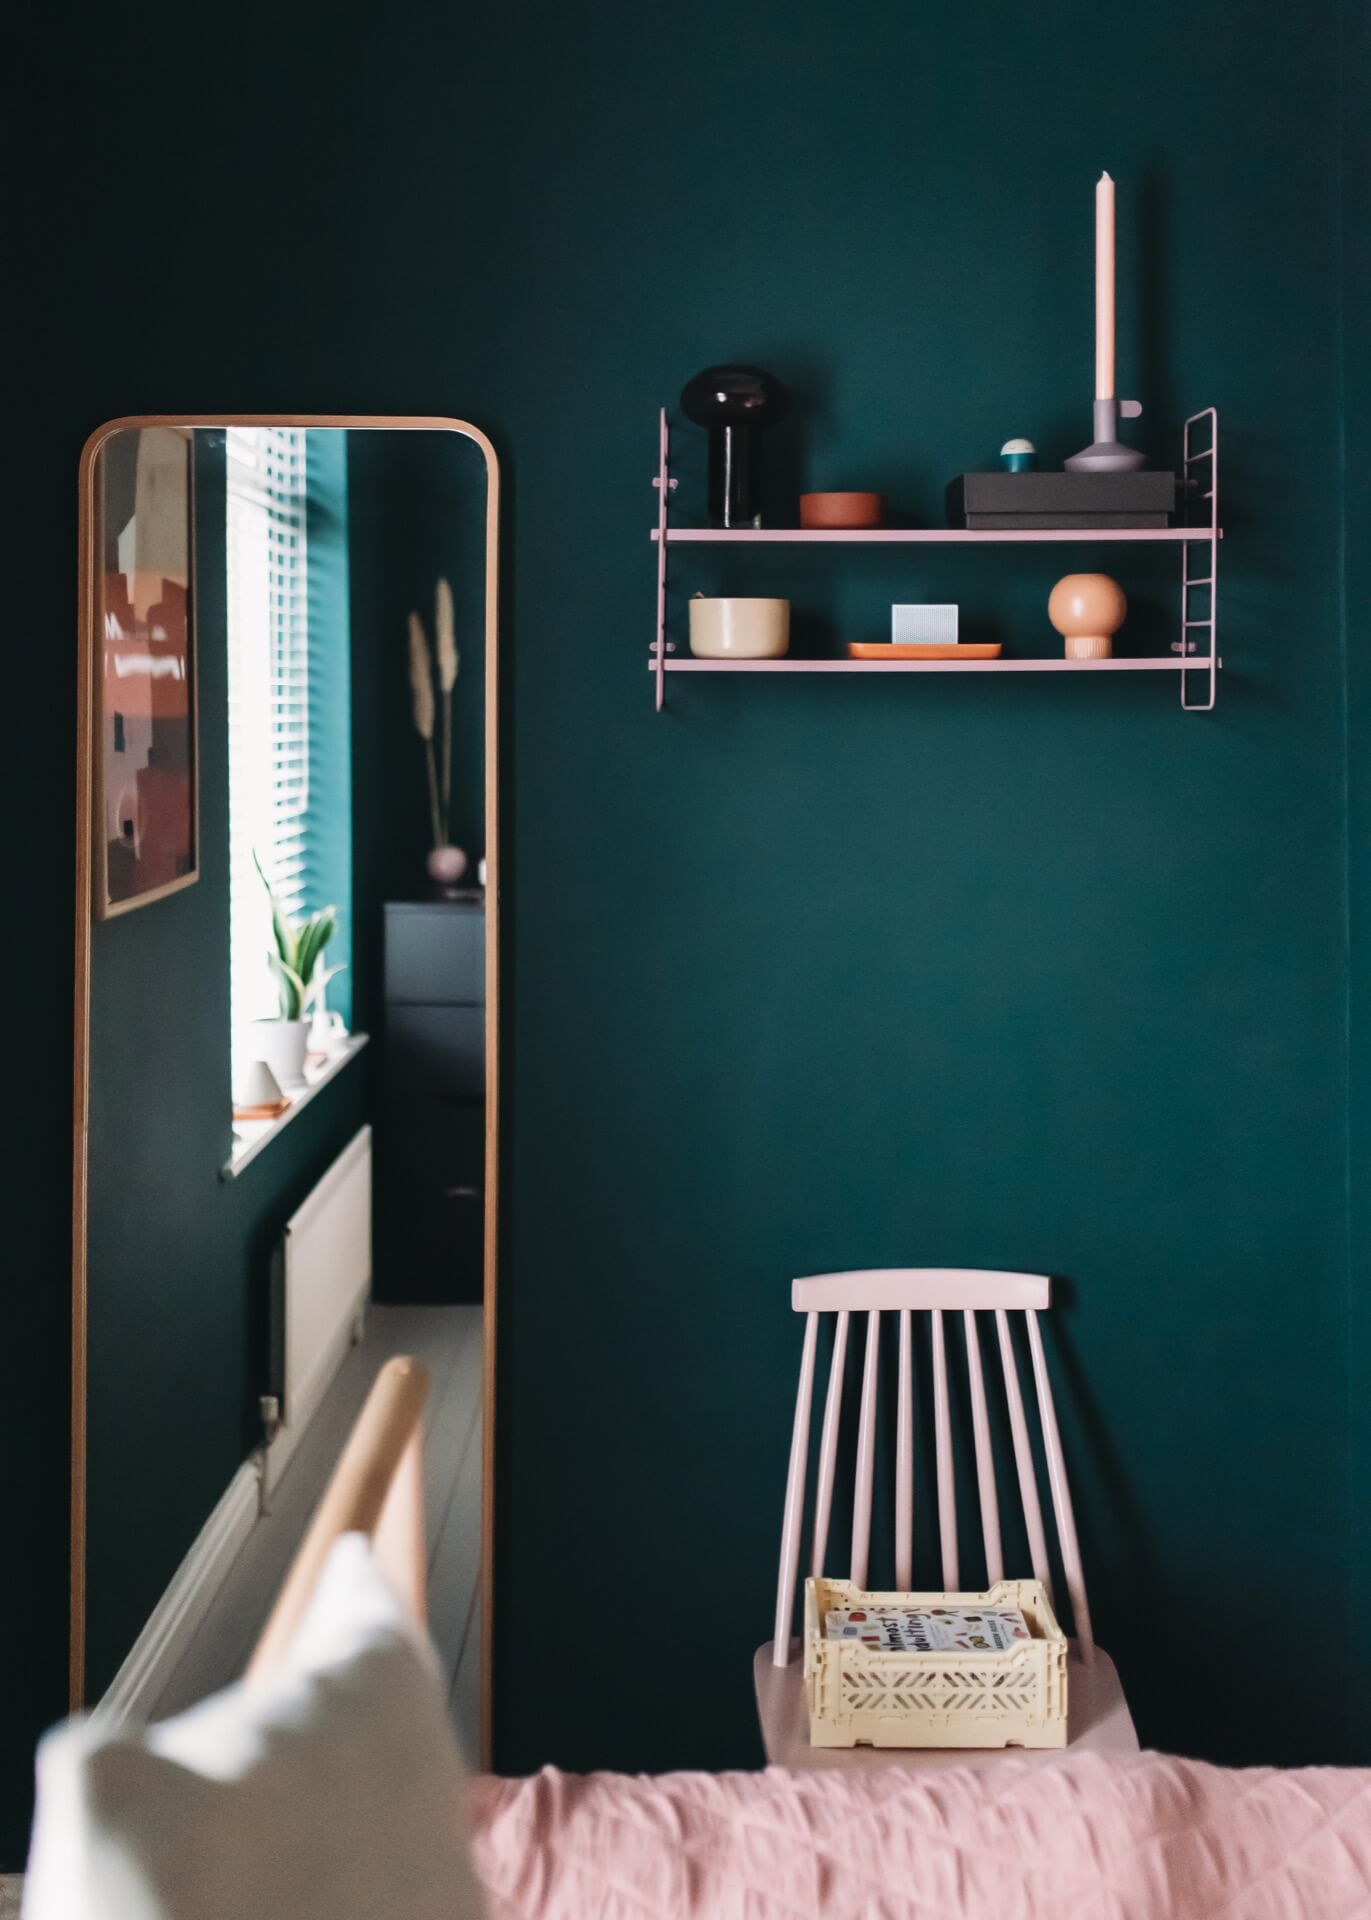 Dark green bedroom with minimalist styling